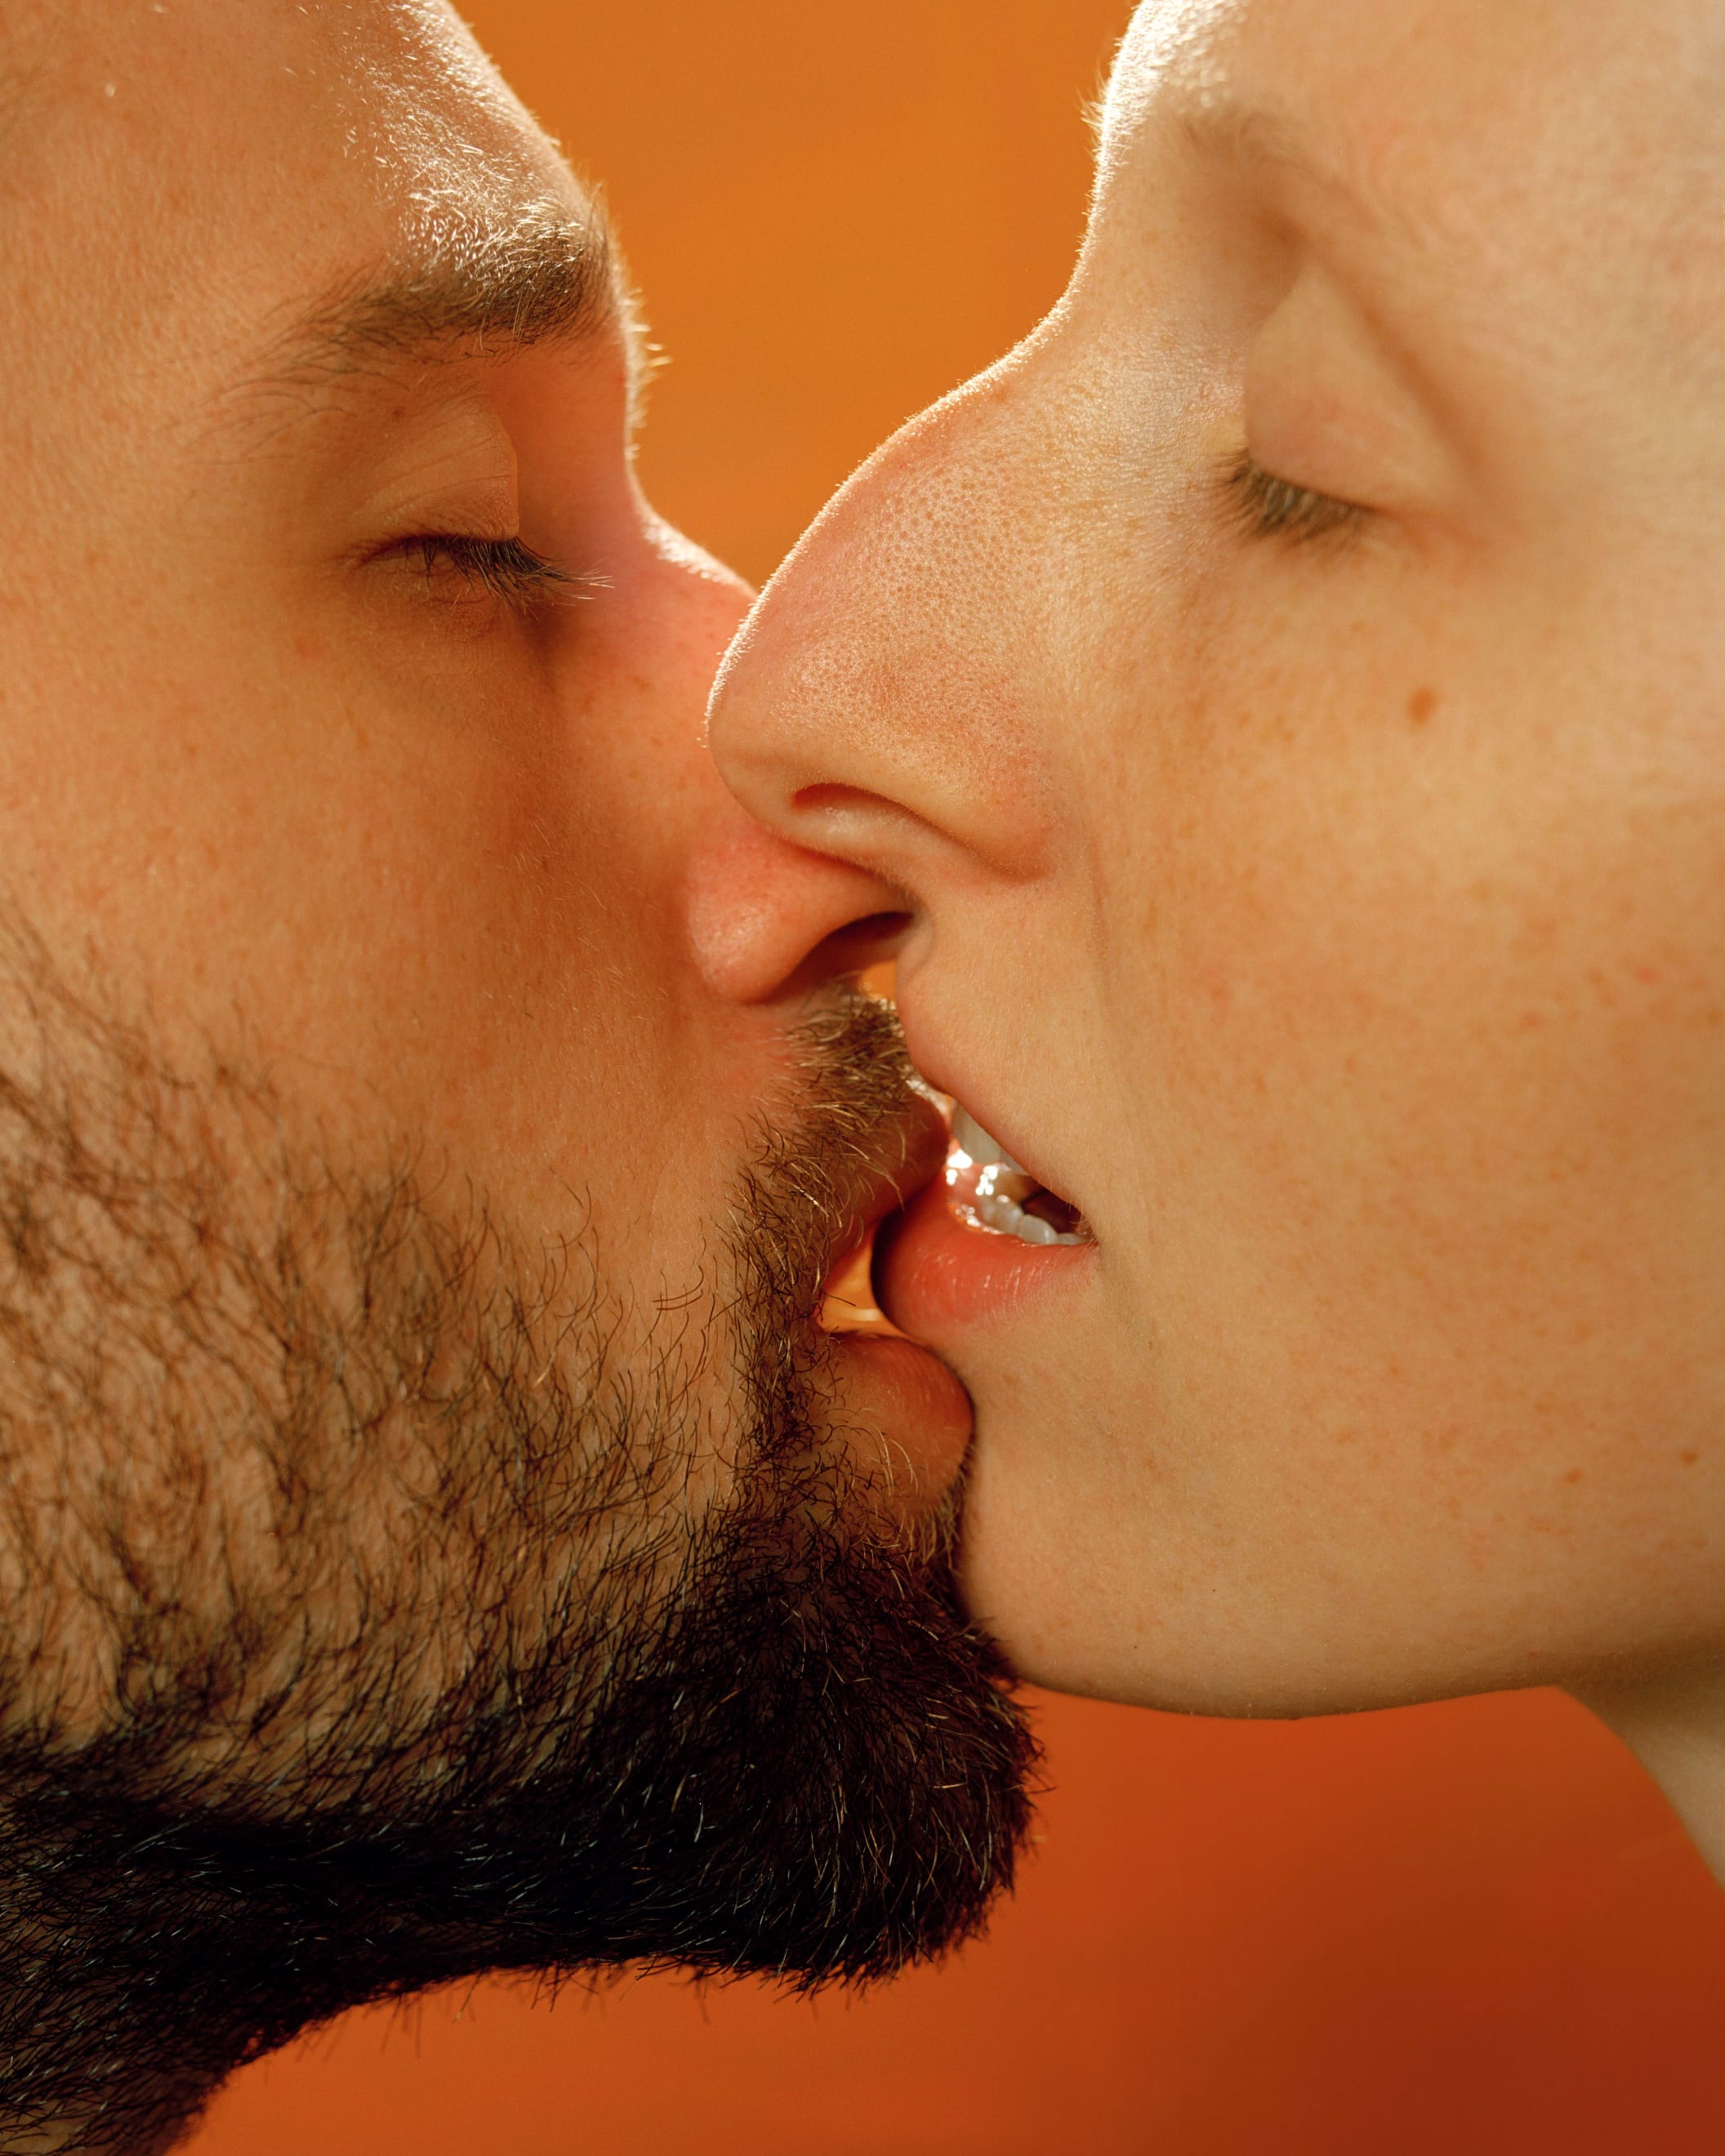 Couple kissing - Carline Tompkins' 'Bedfellow' photobook